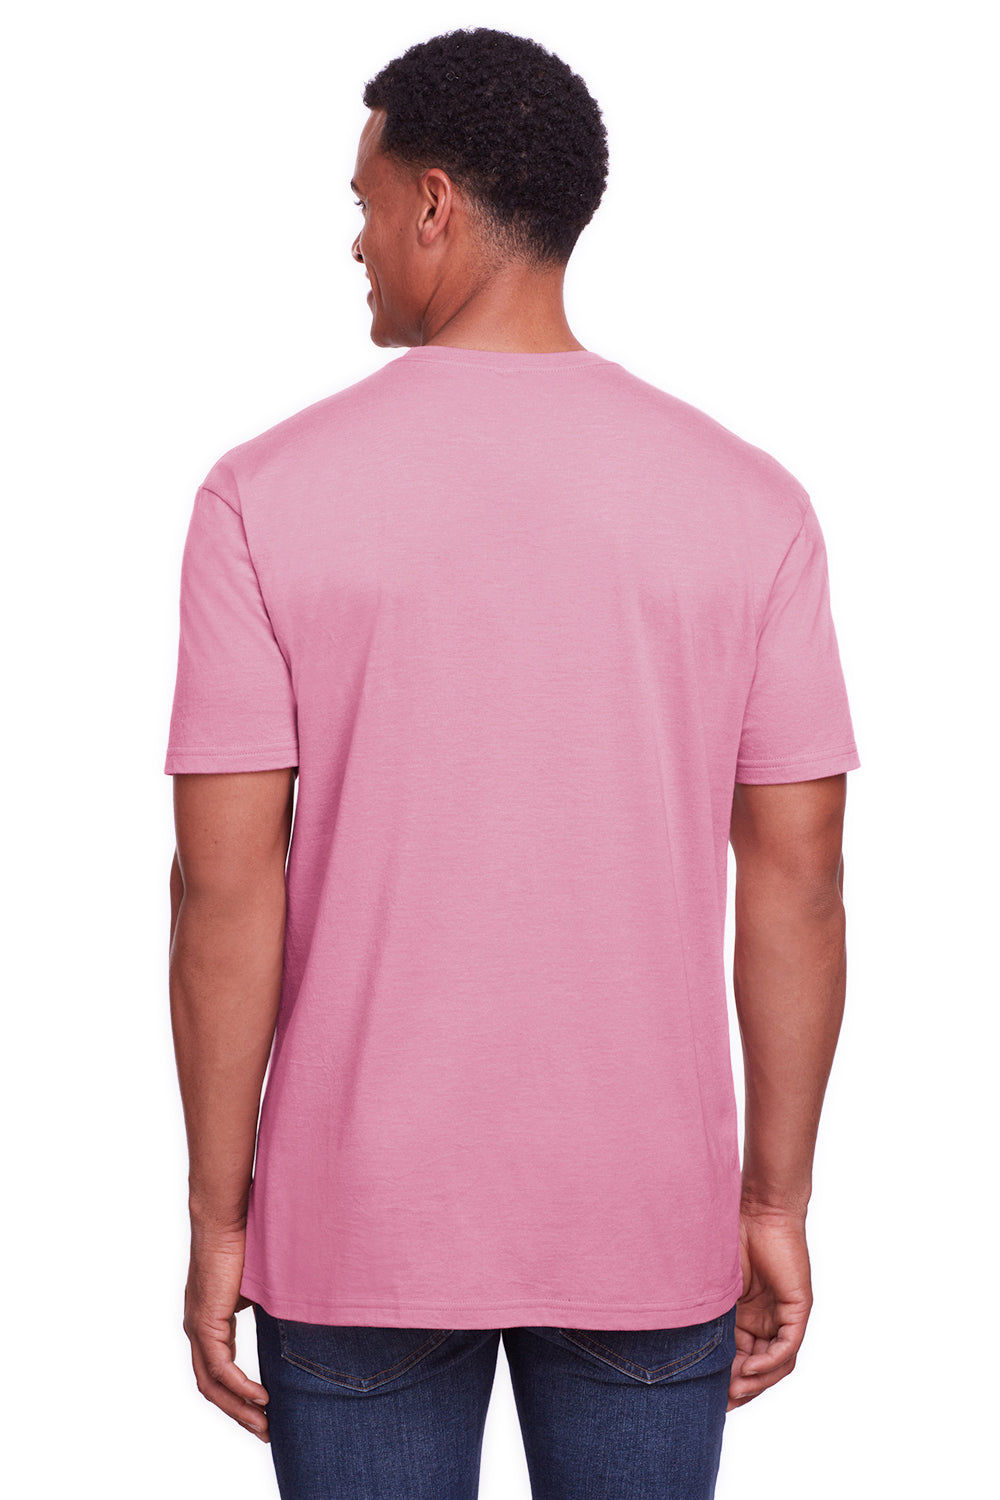 Gildan G670 Mens Softstyle CVC Short Sleeve Crewneck T-Shirt Plumrose Pink Back